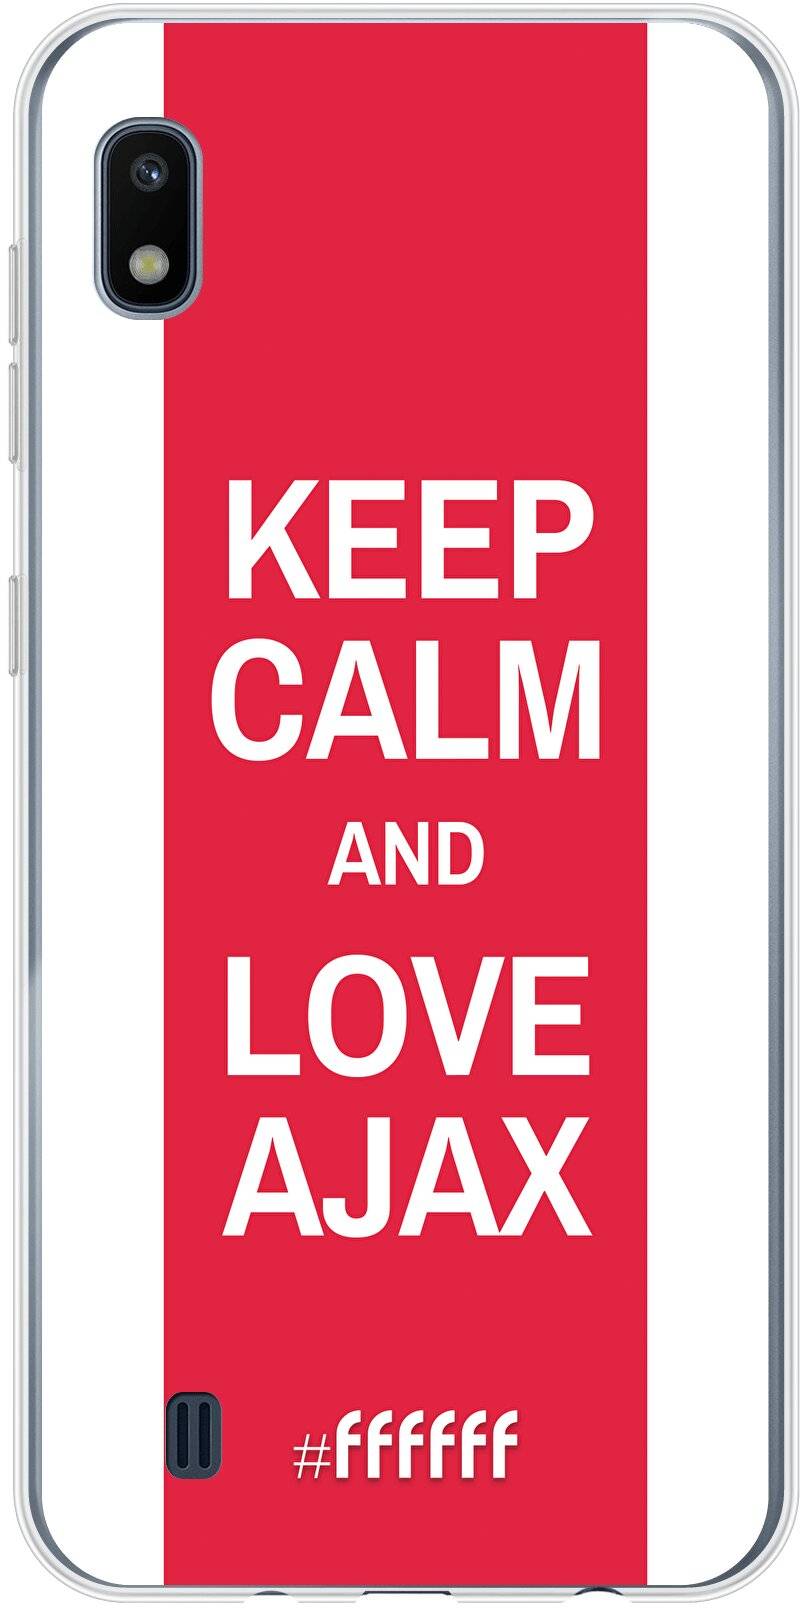 AFC Ajax Keep Calm Galaxy A10